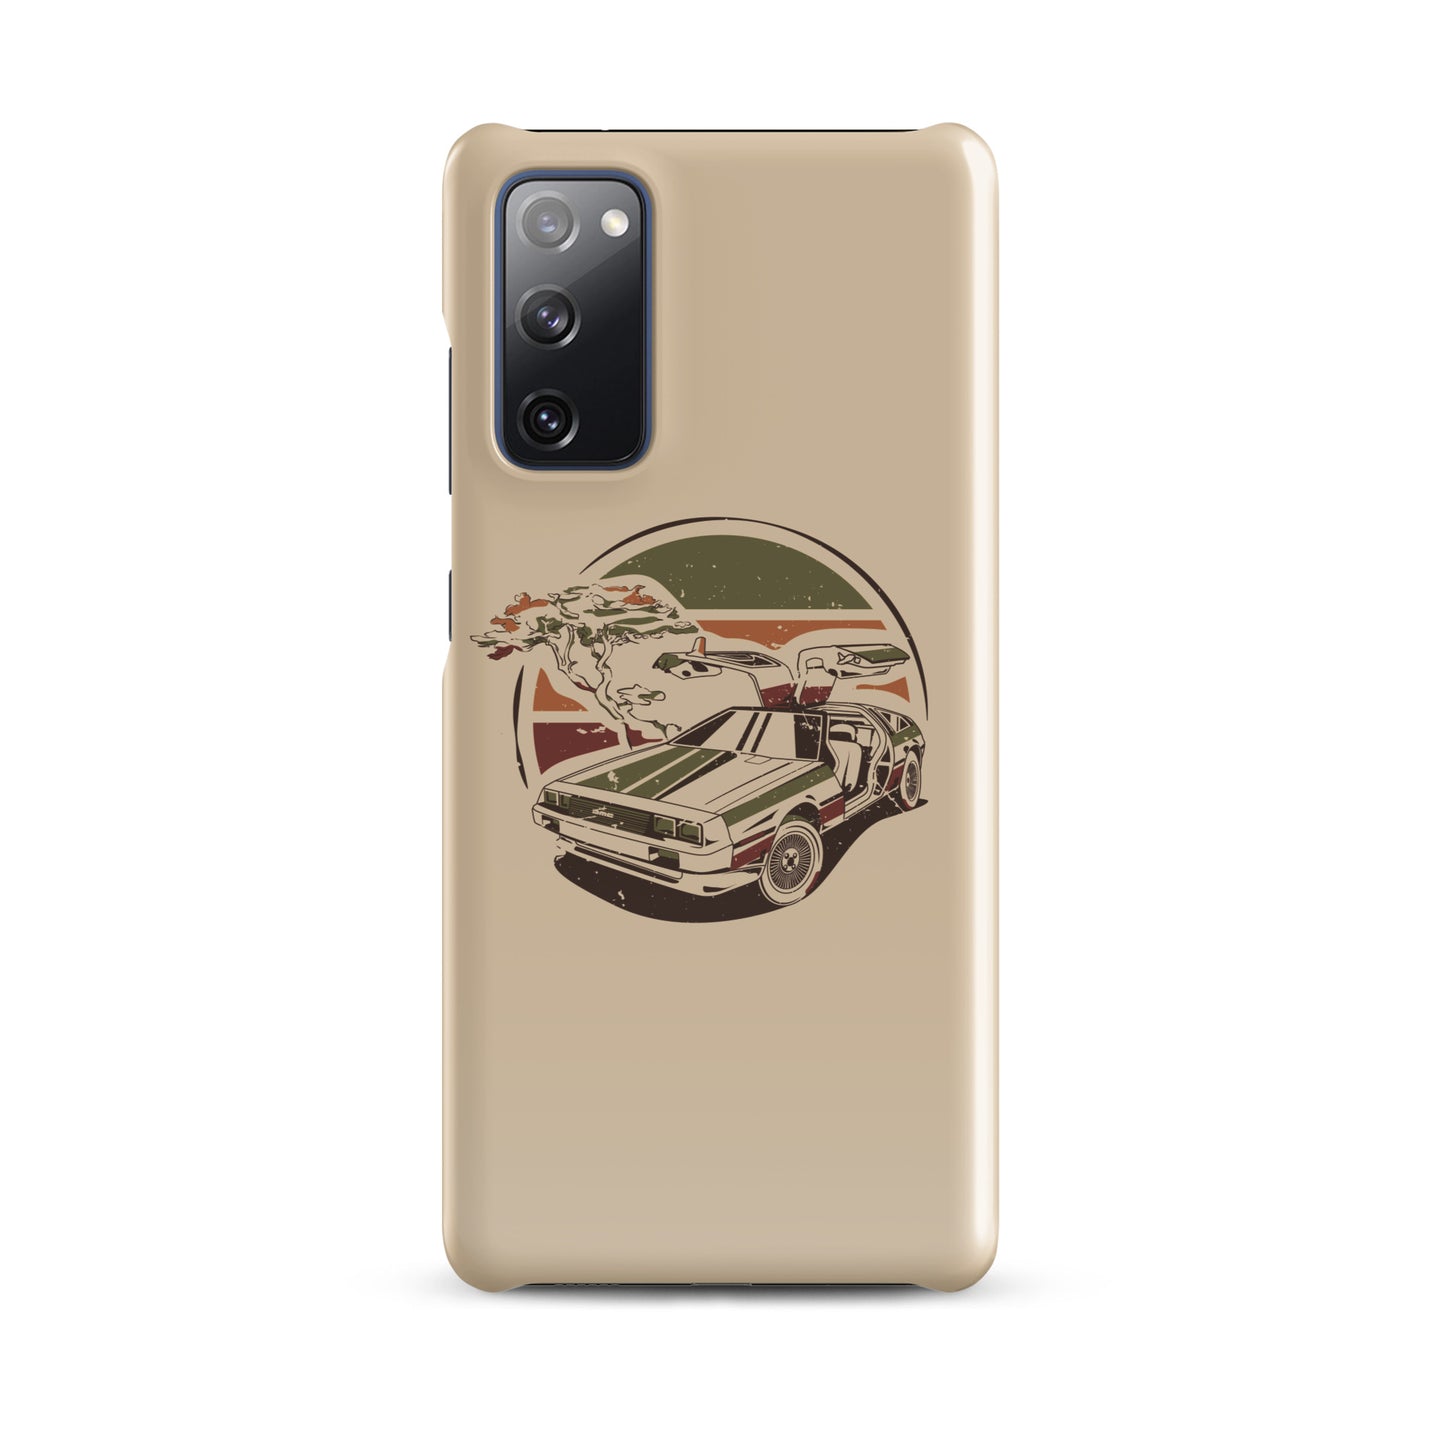 Stylized DeLorean Samsung Phone Case